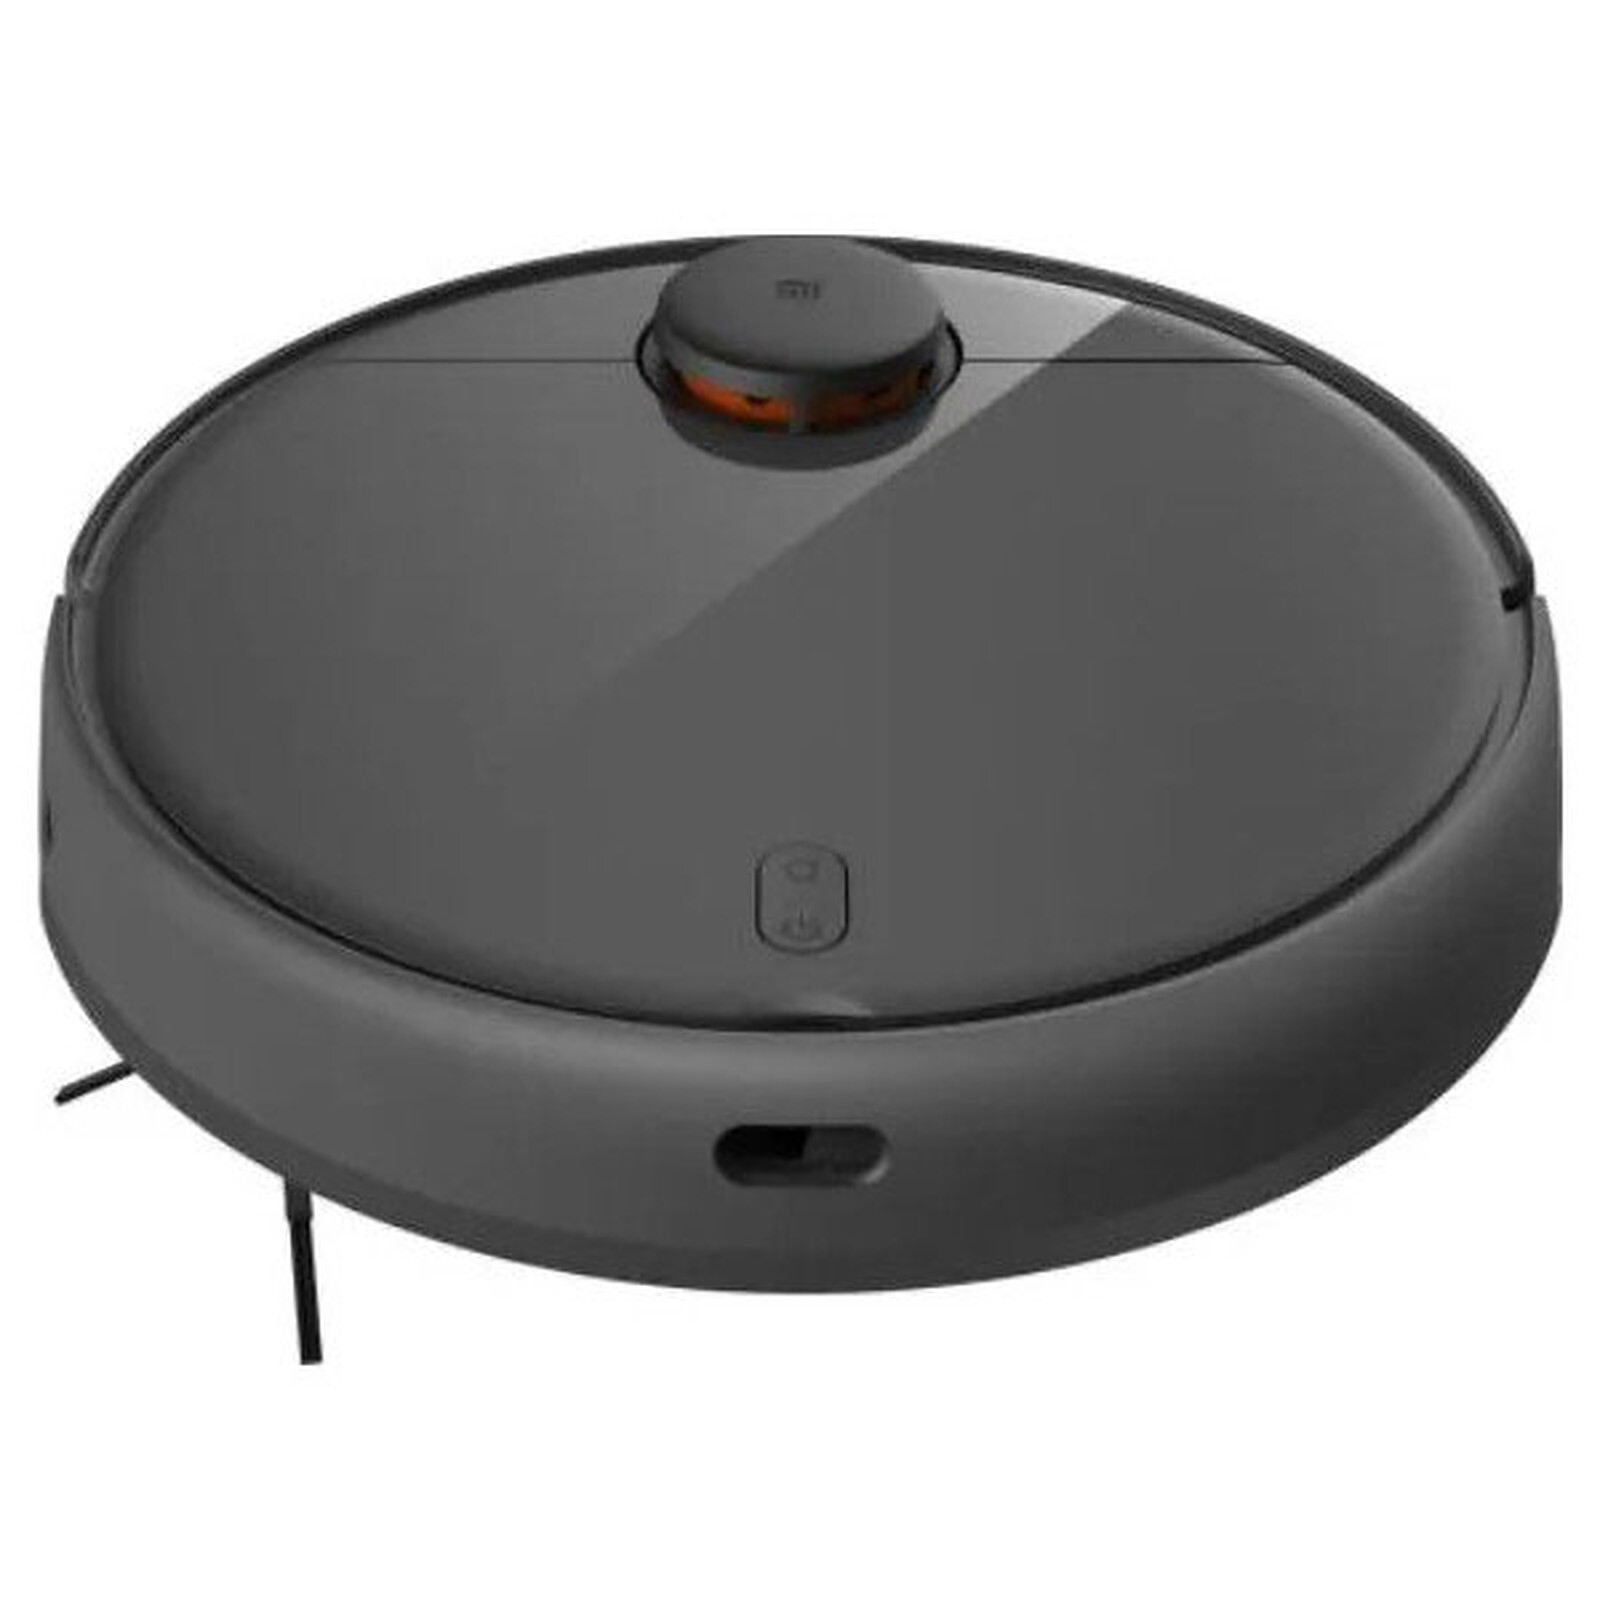 Mi Robot vacuum-Mop 2 Pro